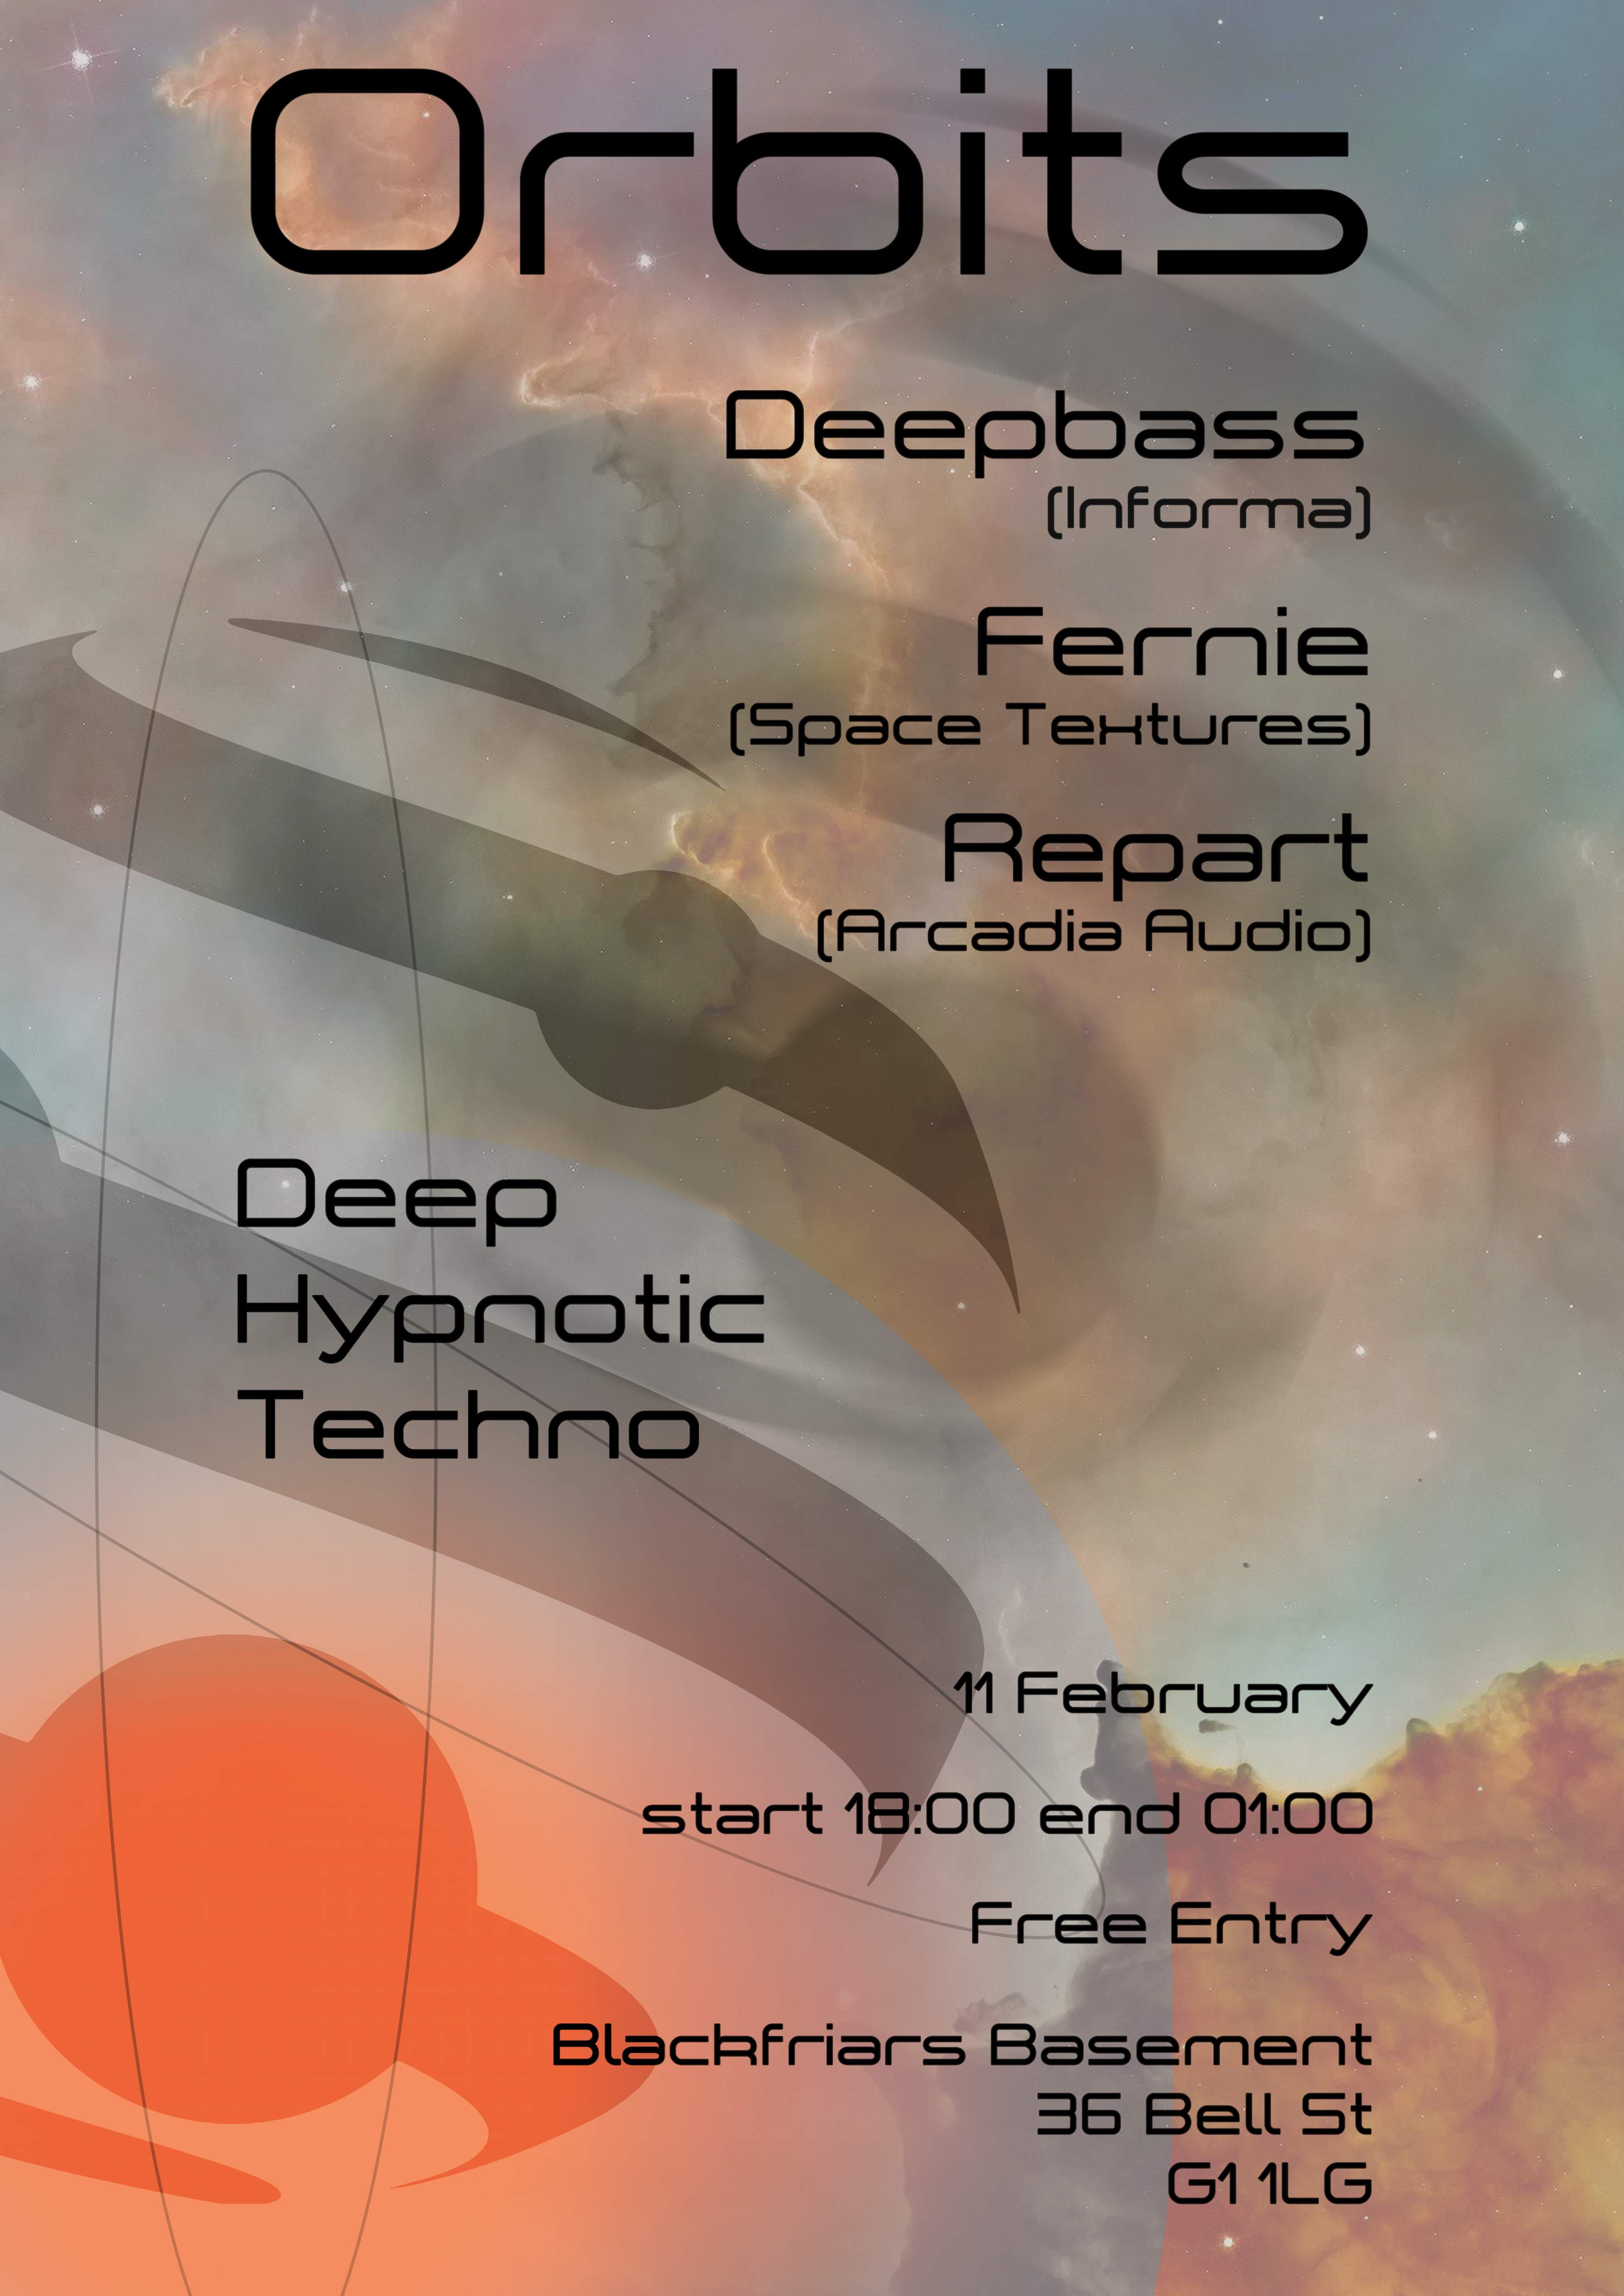 Orbits - Deep hypnotic techno with Deepbass, Fernie and Repart - フライヤー表